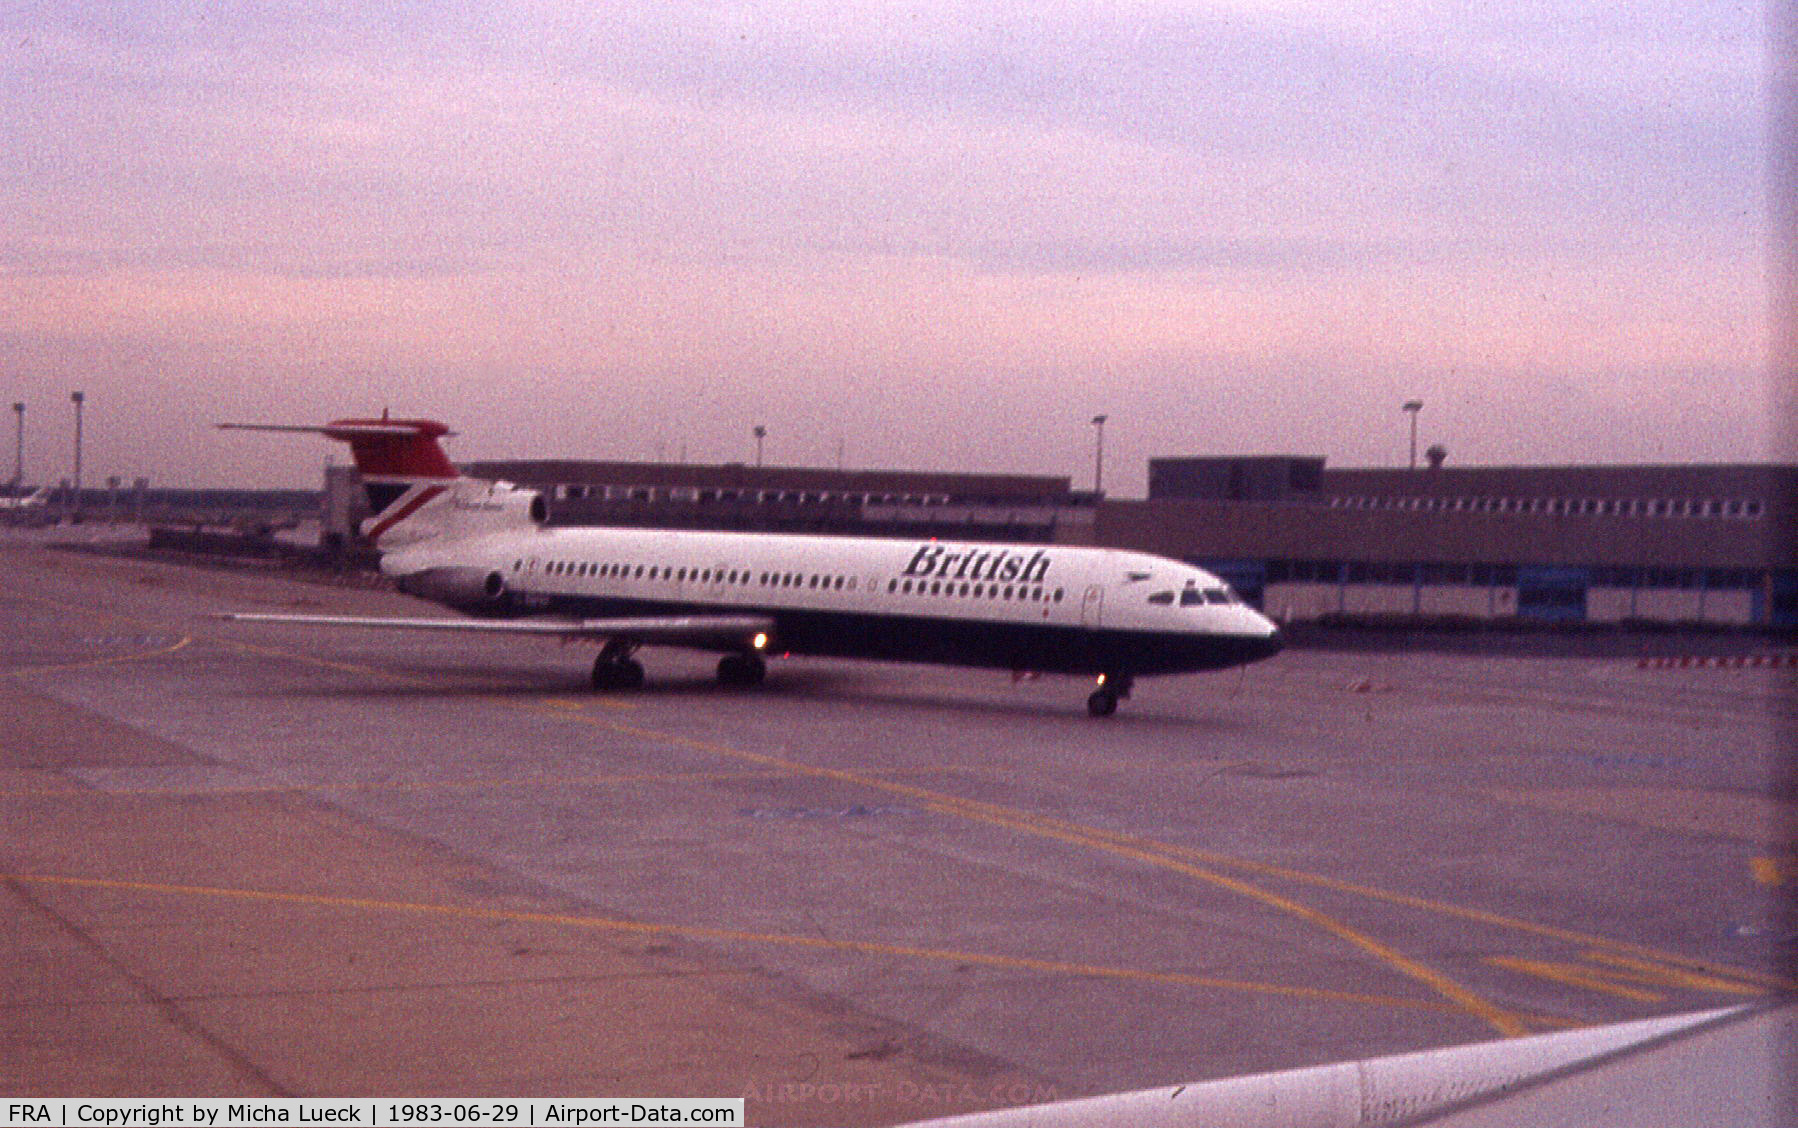 Frankfurt International Airport, Frankfurt am Main Germany (FRA) - BA's Trident arriving at Frankfurt